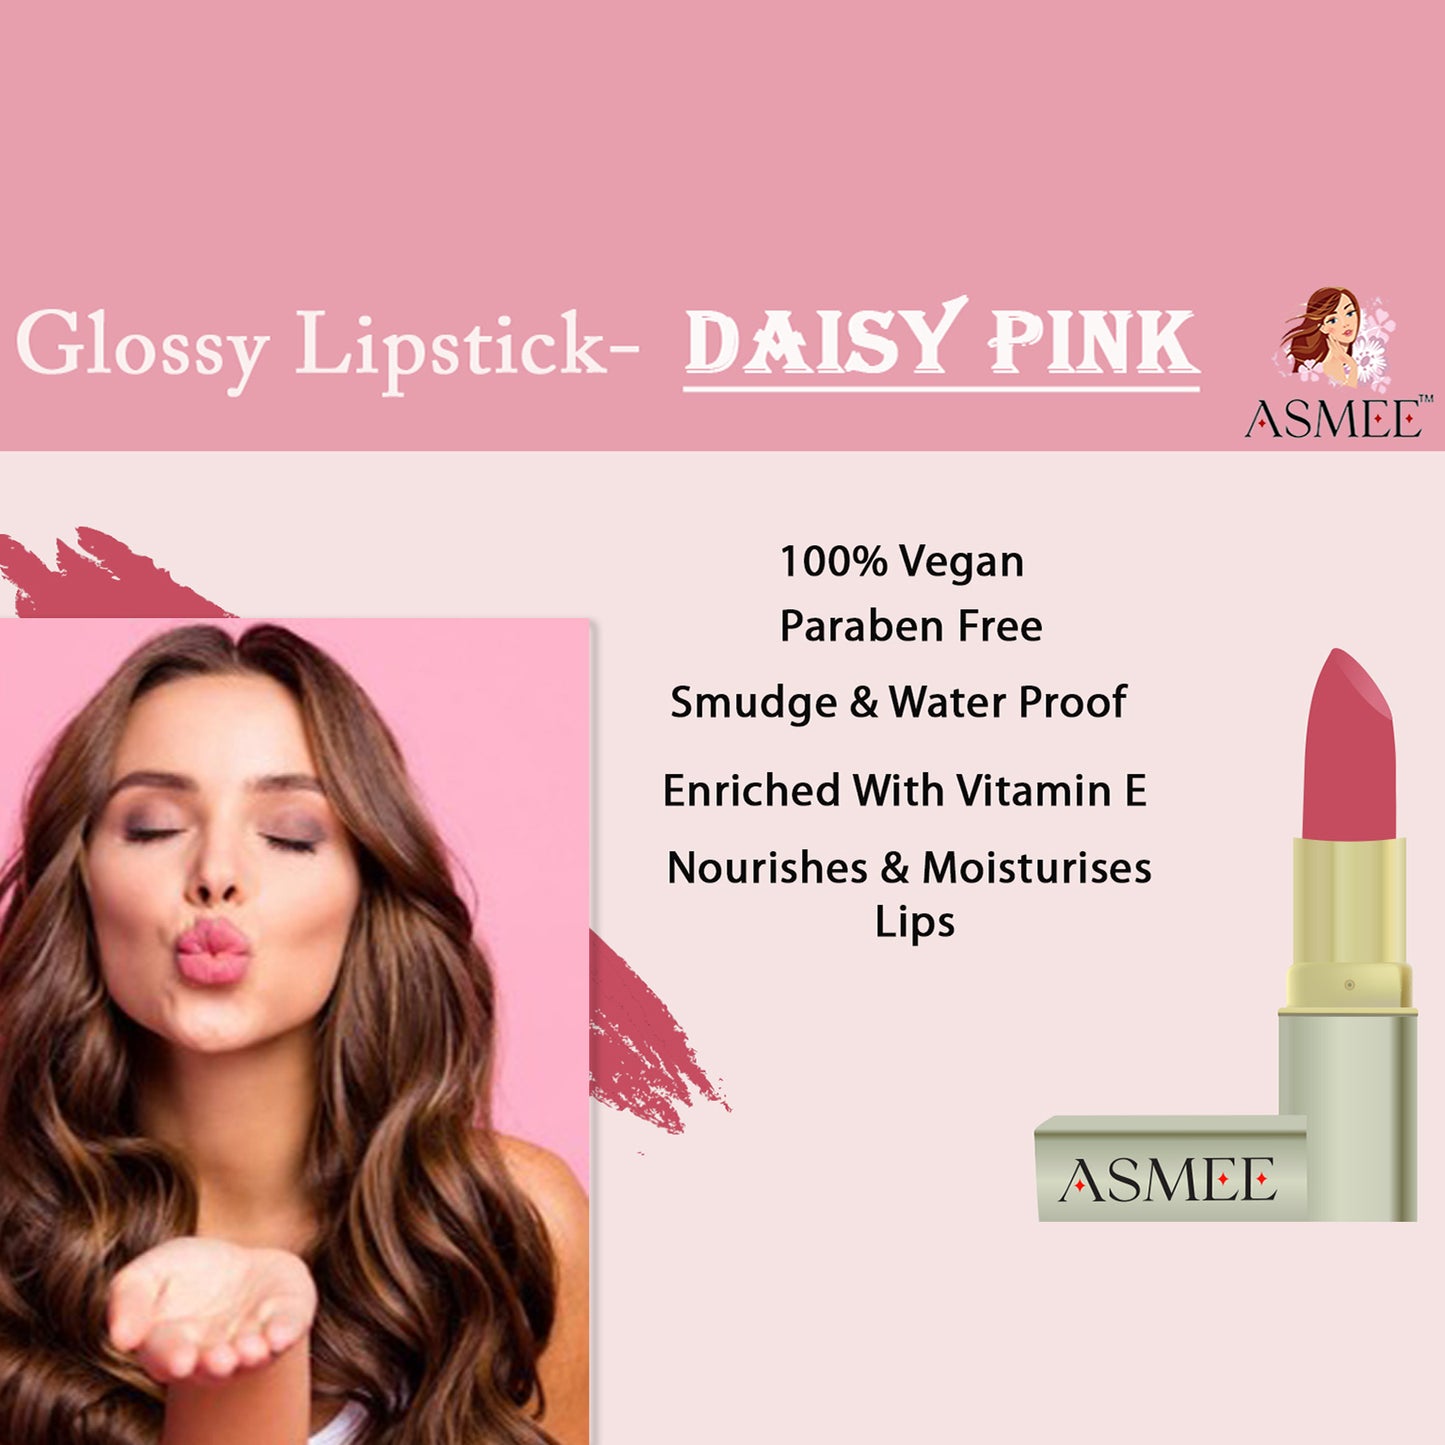 Asmee Liquid Lipstick - Tropical Hibiscus  &  Get Glossy Lipstick- Daisy Pink Free